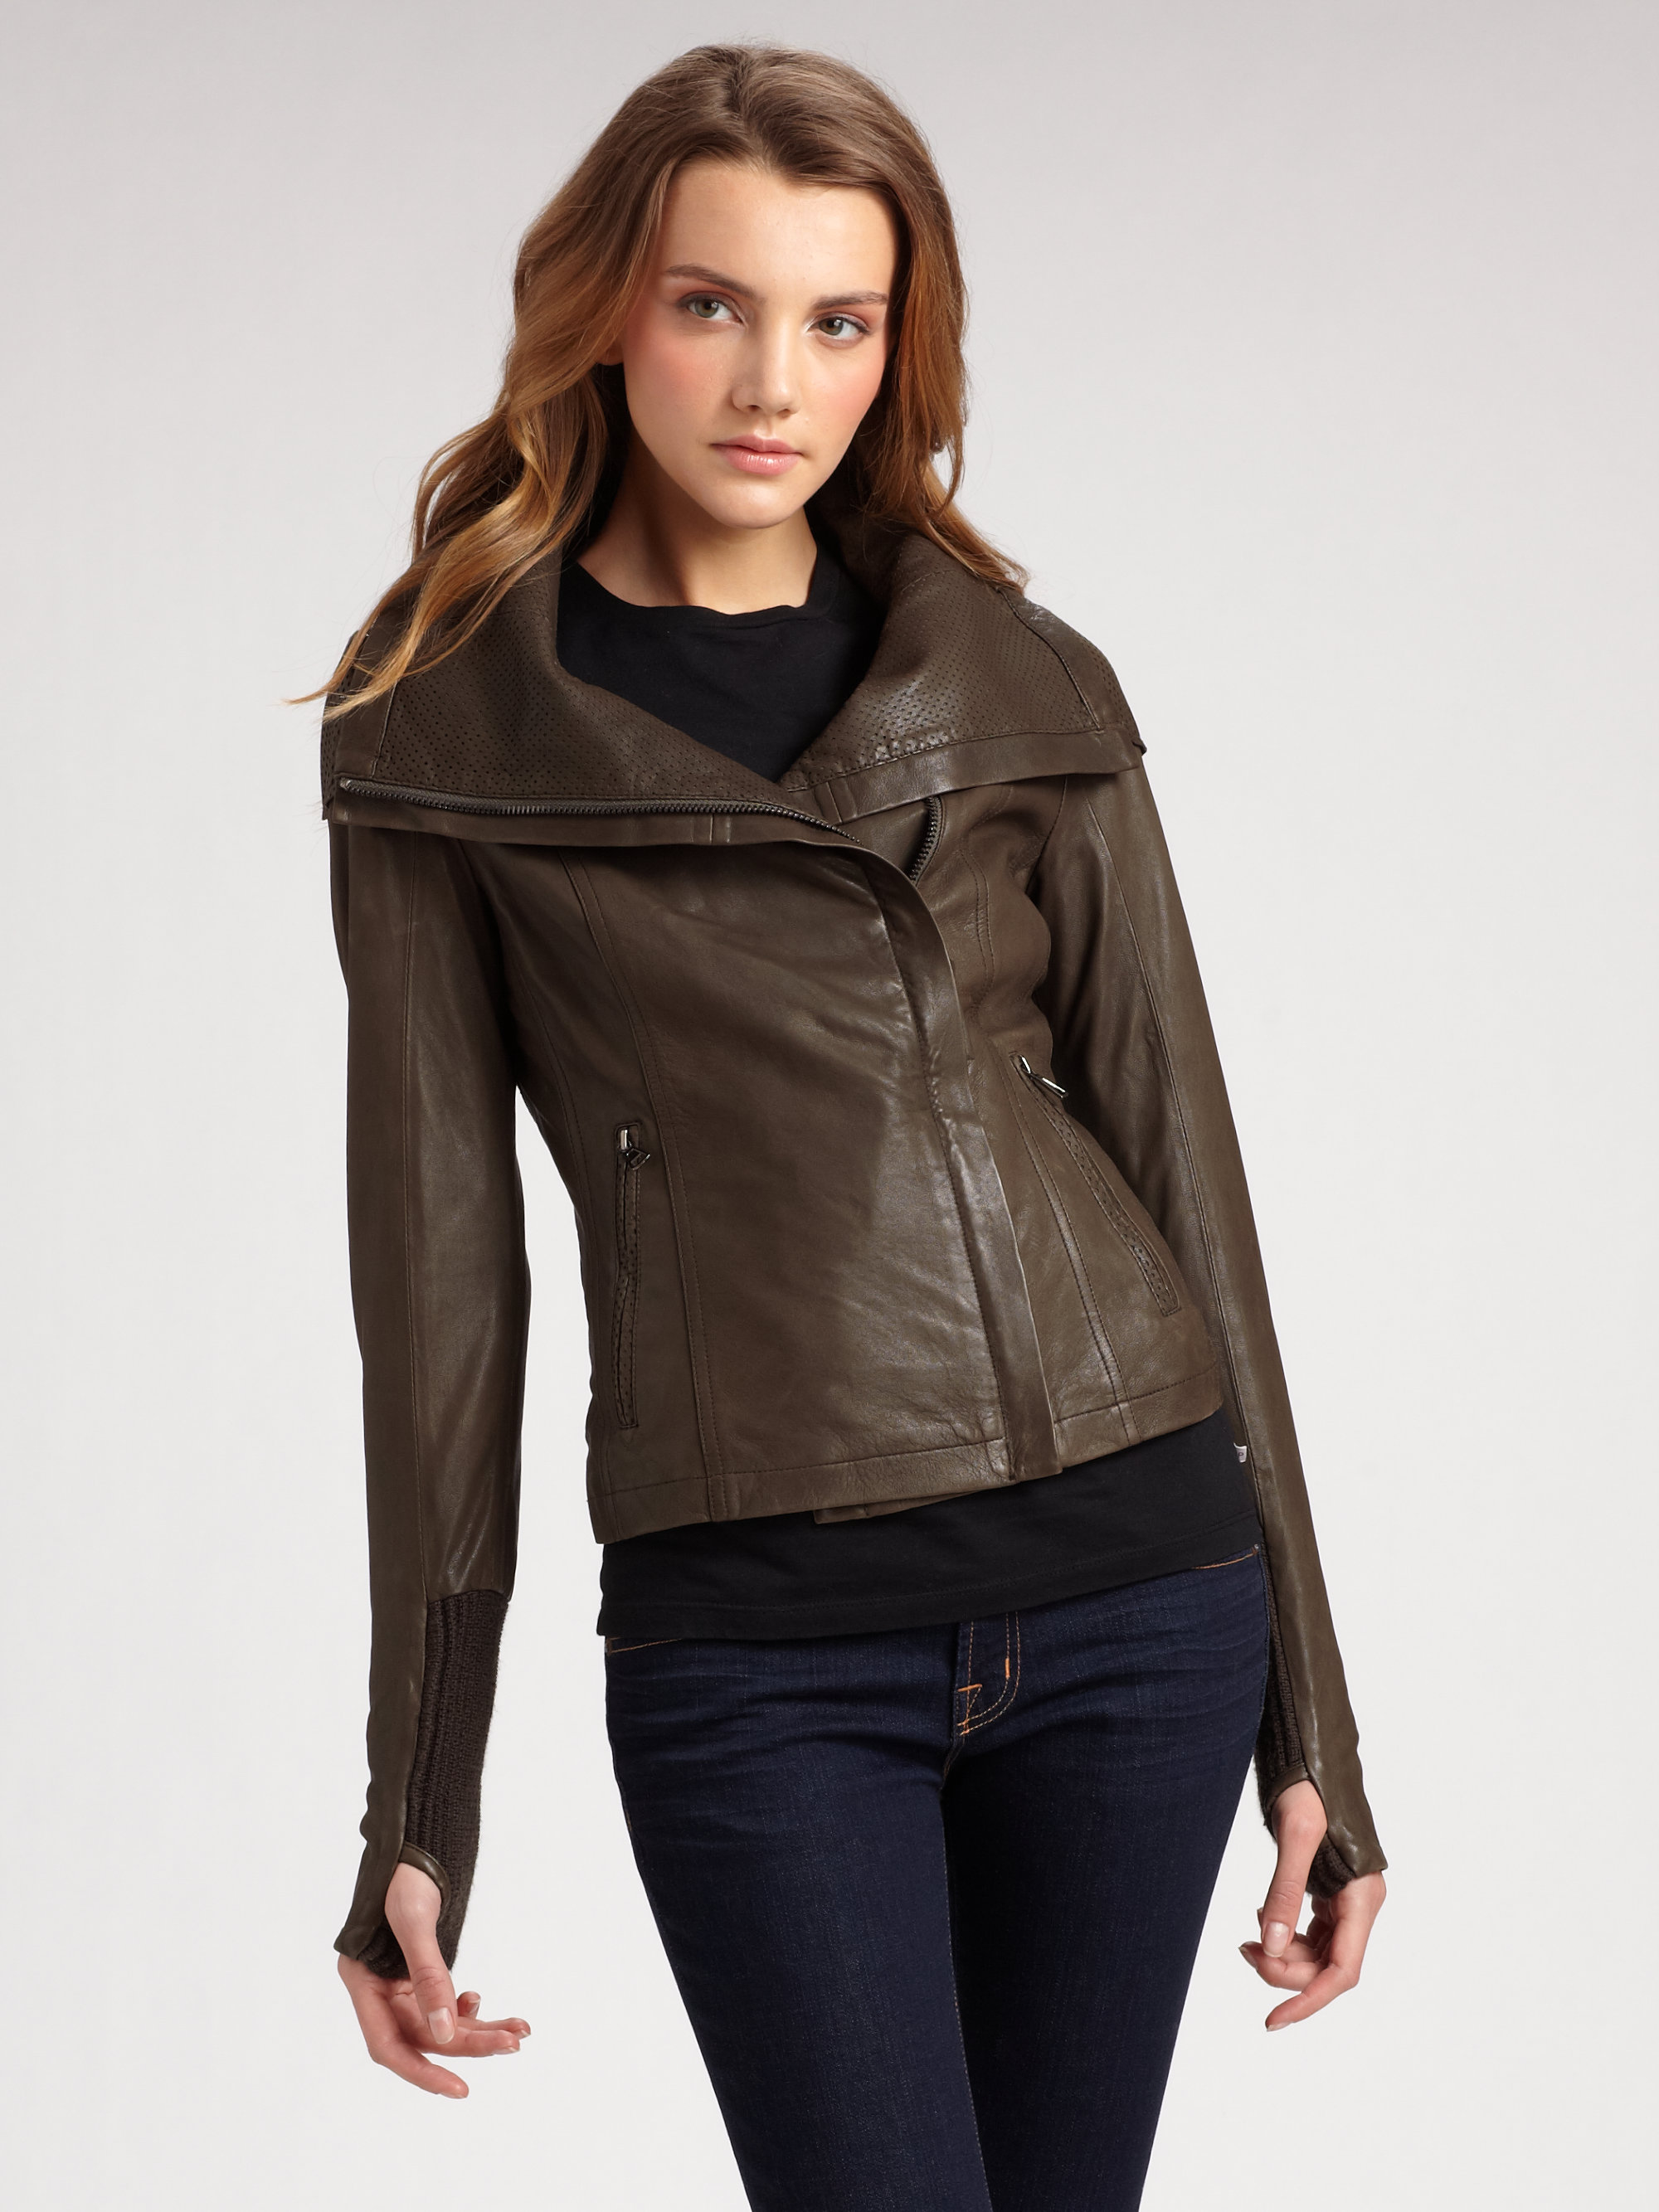 Mackage Asymmetric Leather Jacket in Brown - Lyst